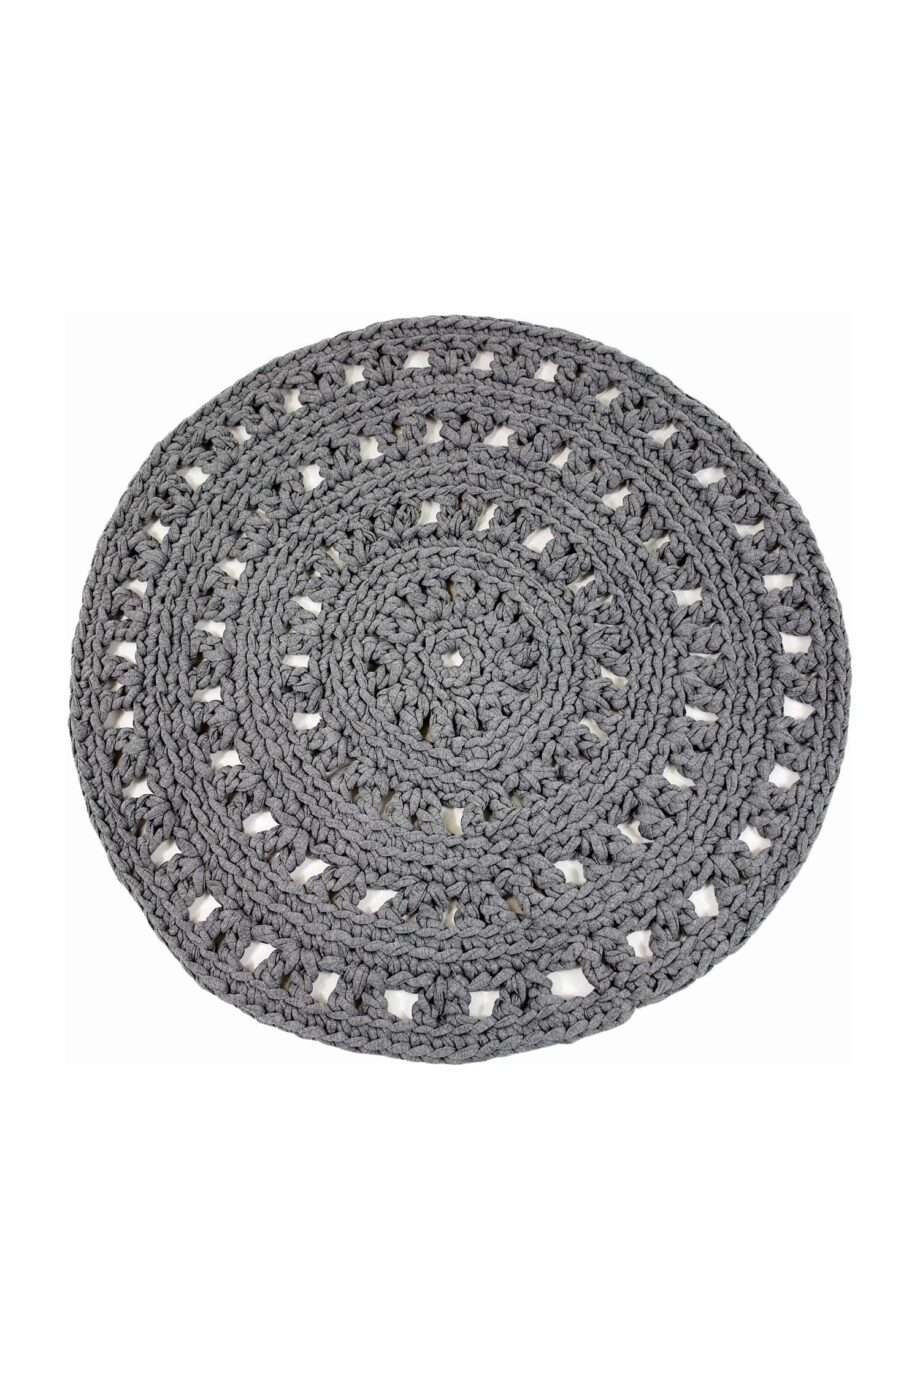 arab grey crochet cotton floor mat small